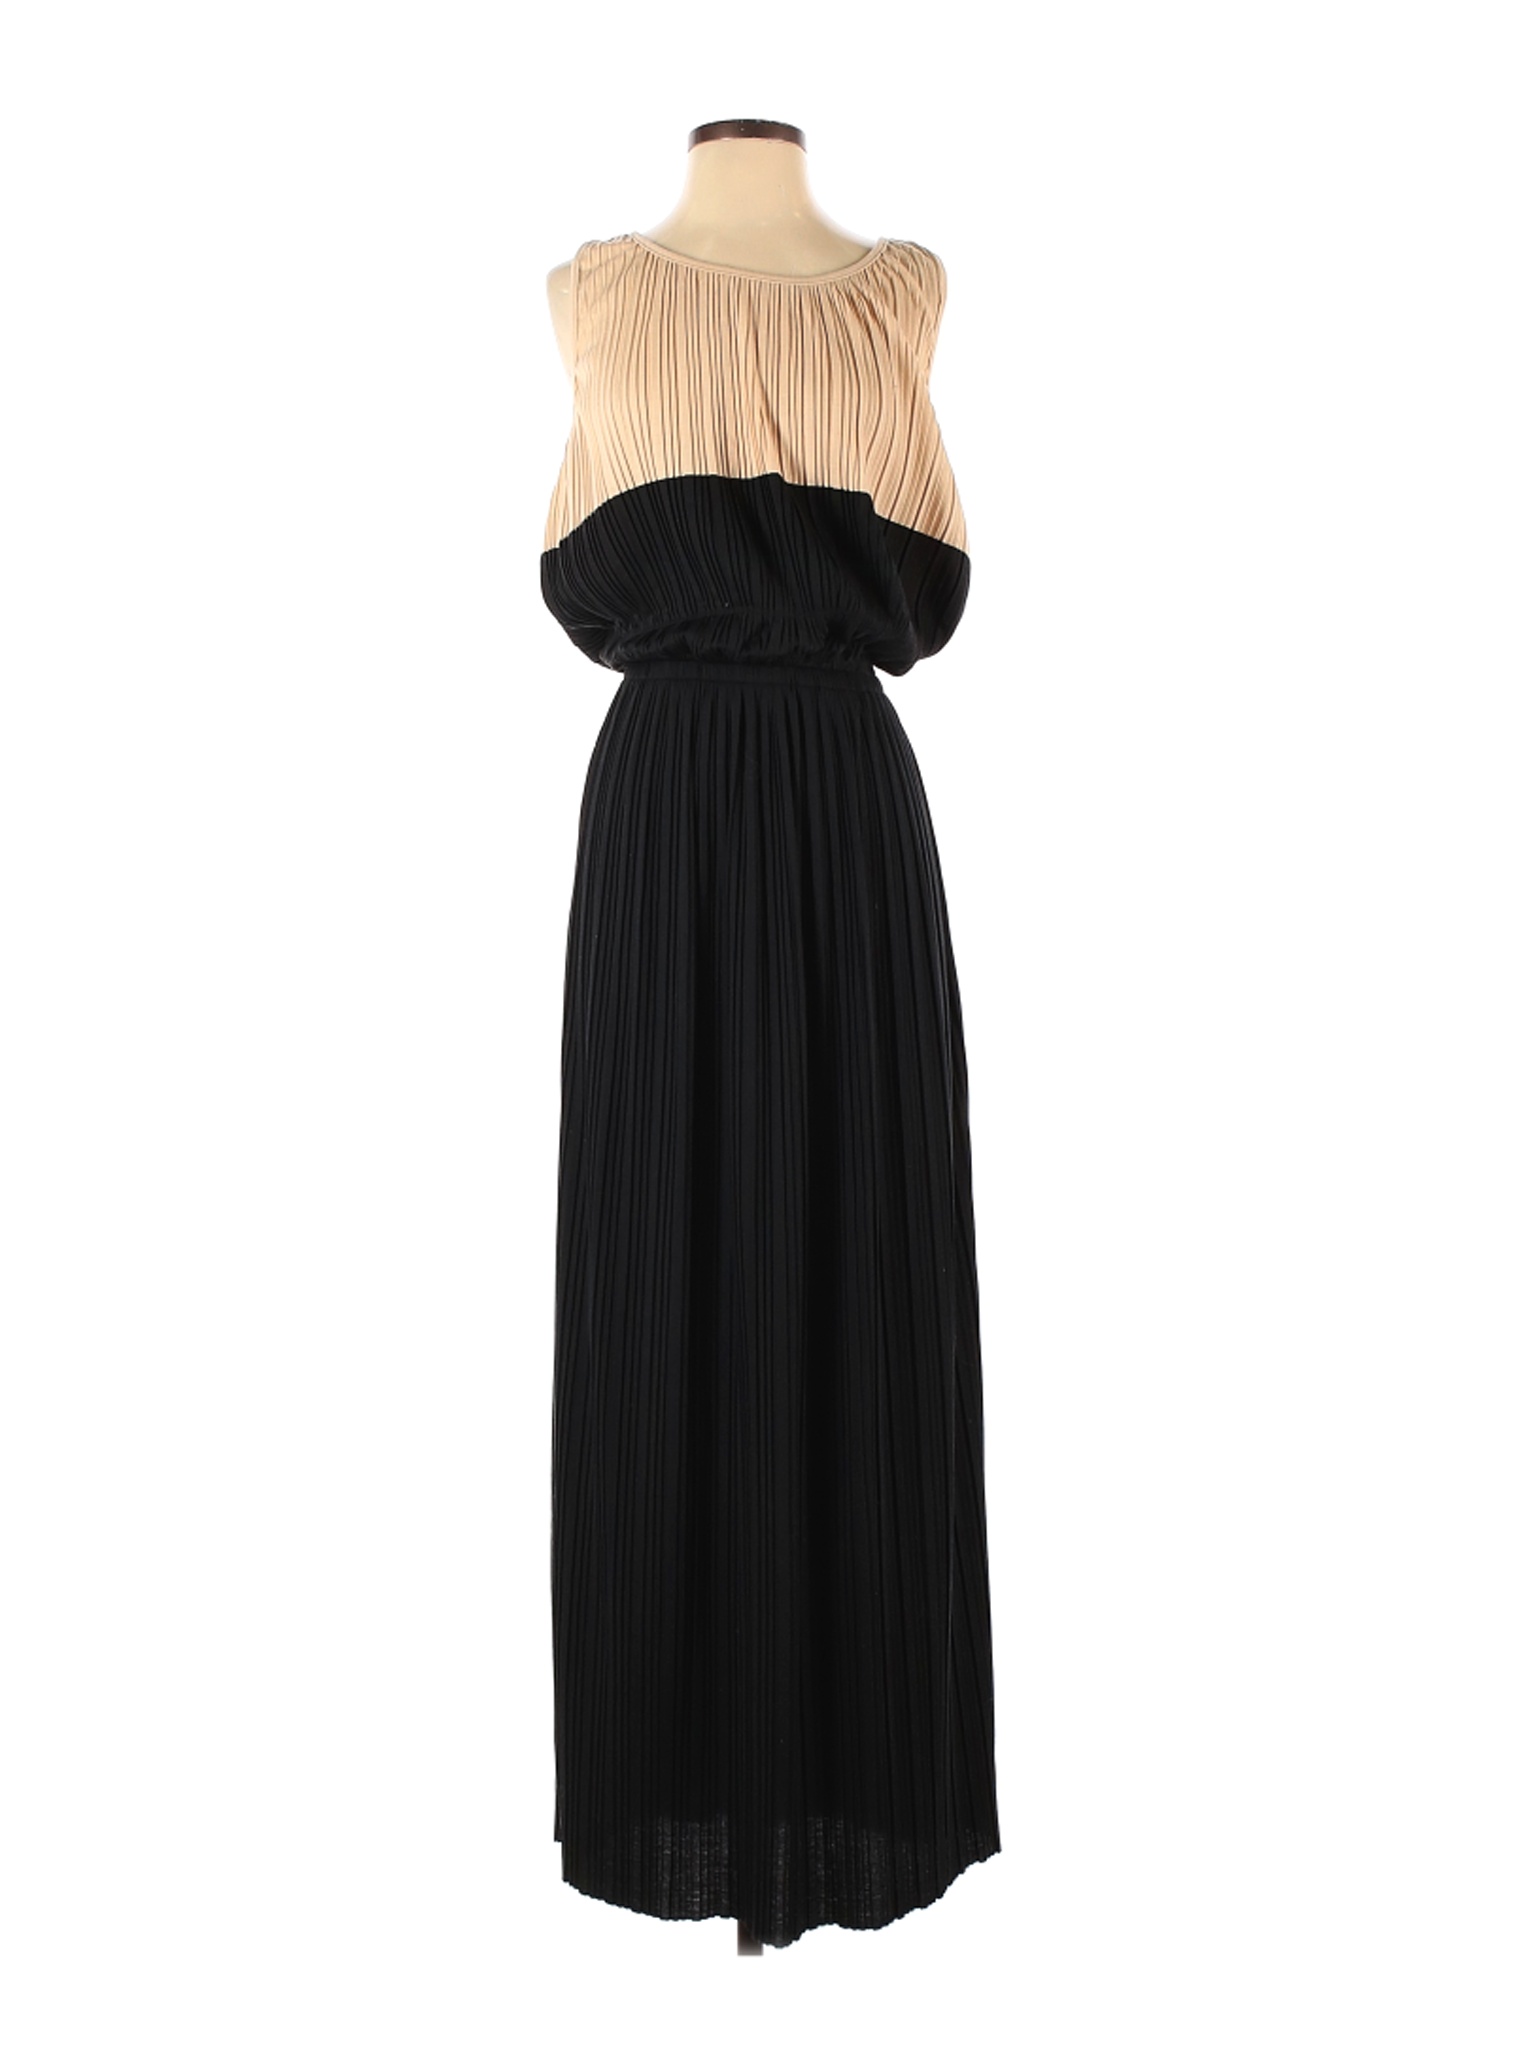 Philosophy Republic Clothing Women Black Casual Dress S | eBay